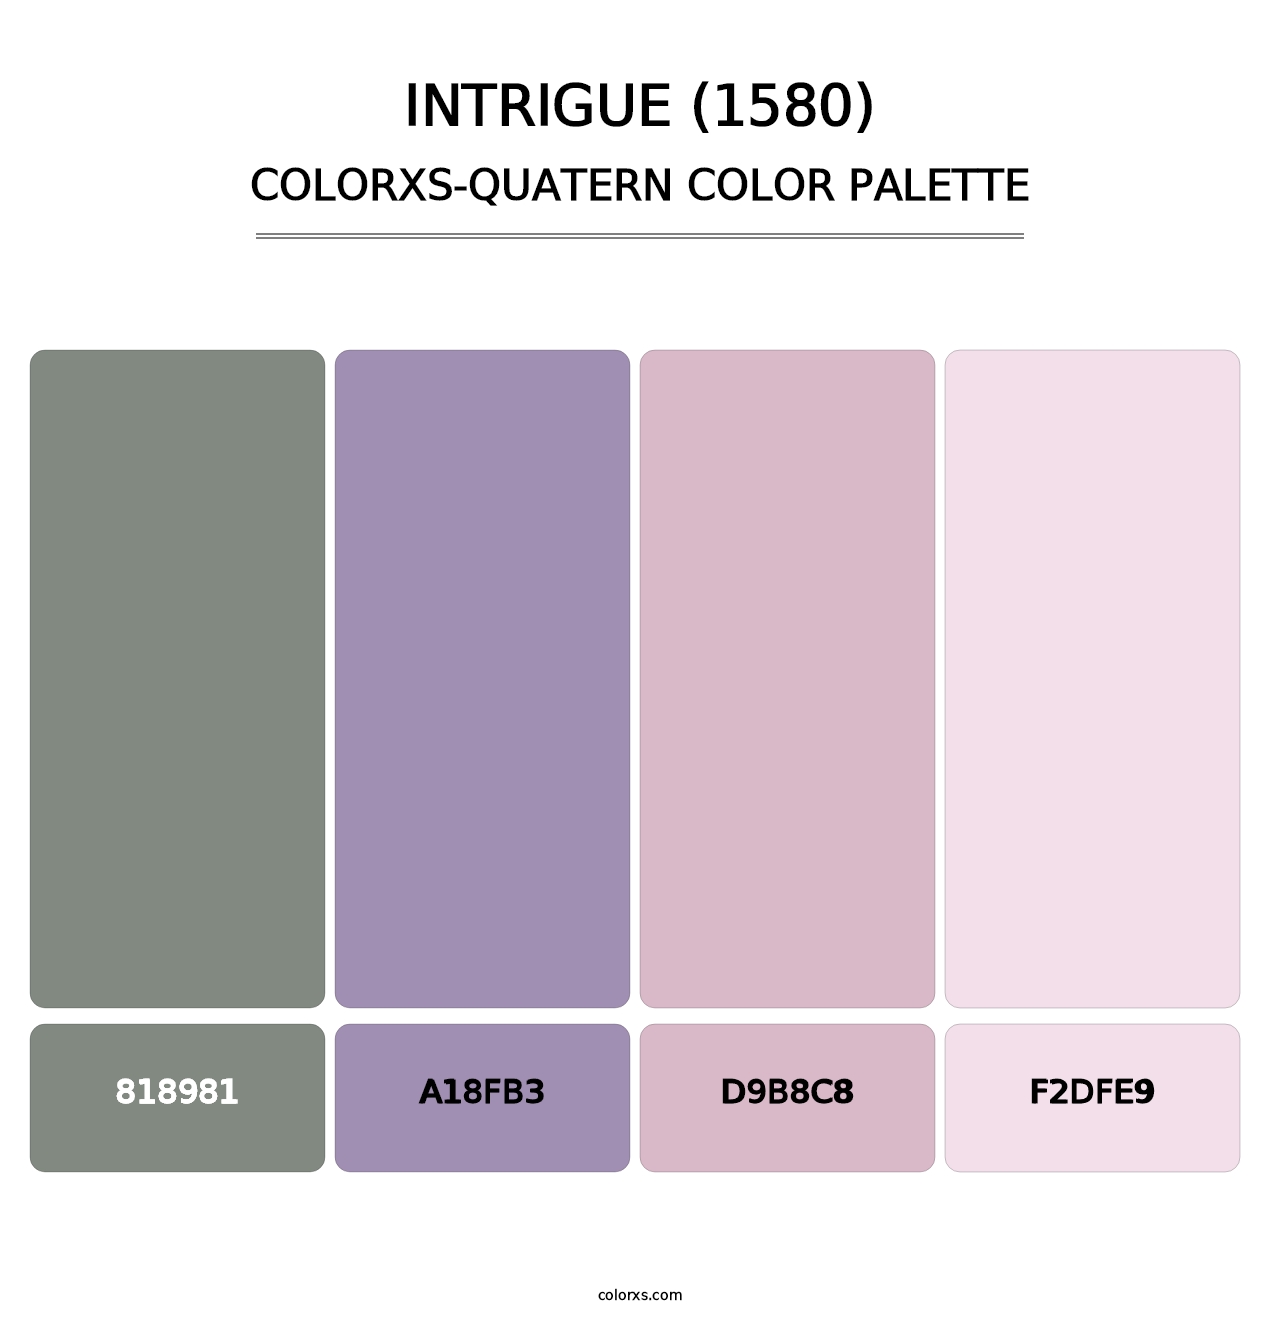 Intrigue (1580) - Colorxs Quatern Palette